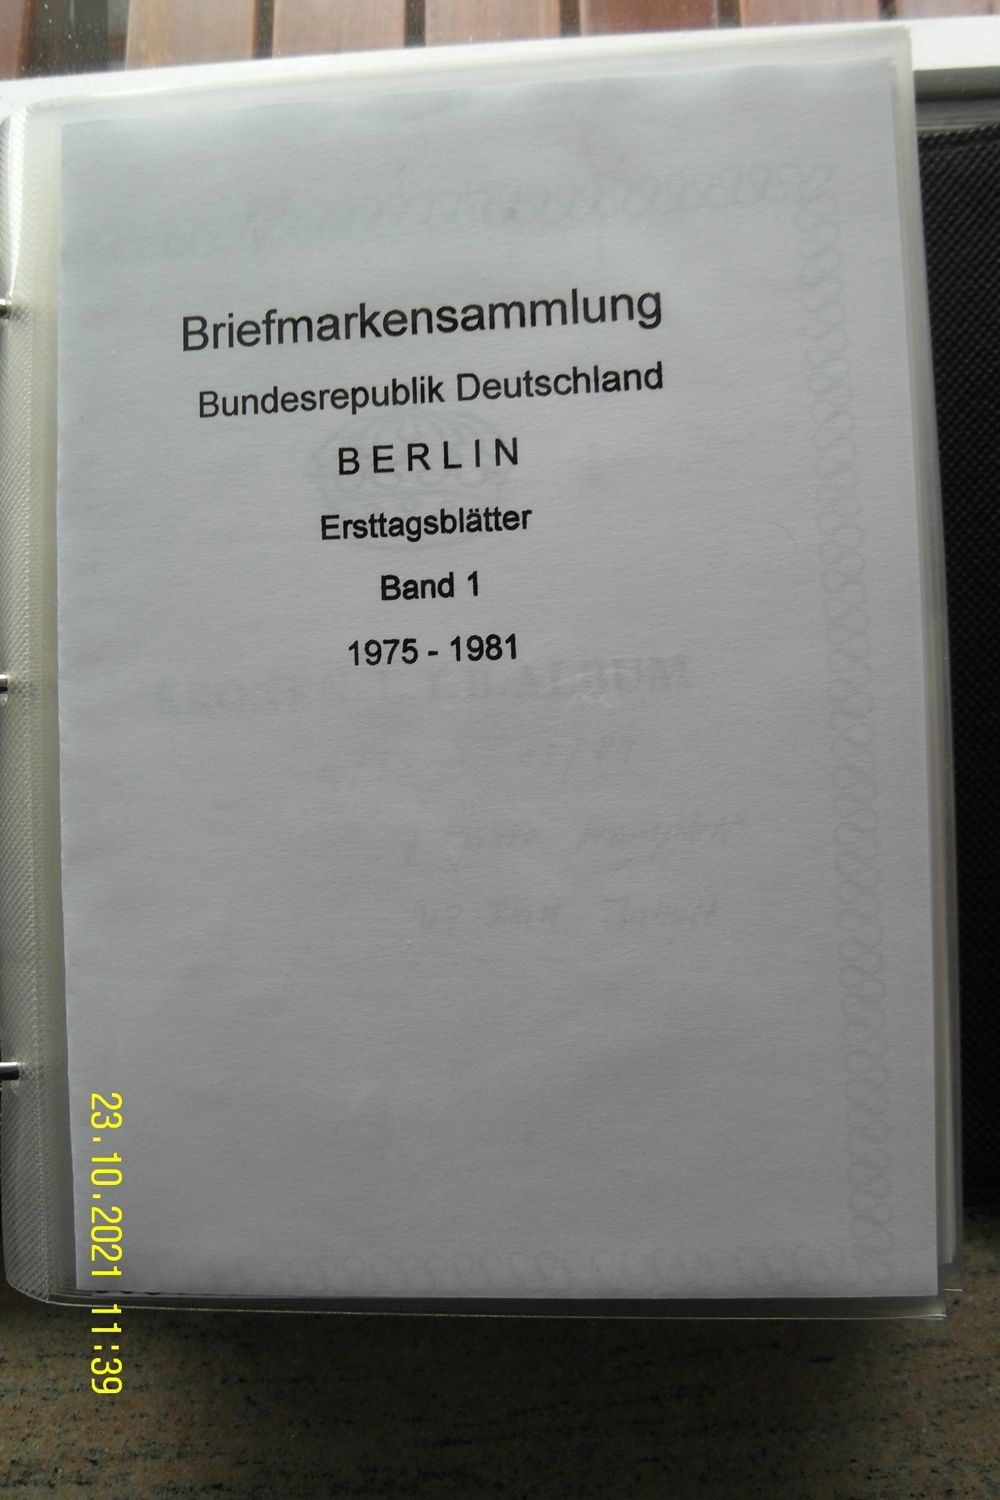 Berlin - ETB s Band 1 - 1975 - 1981 - komplett im blauen Post Album